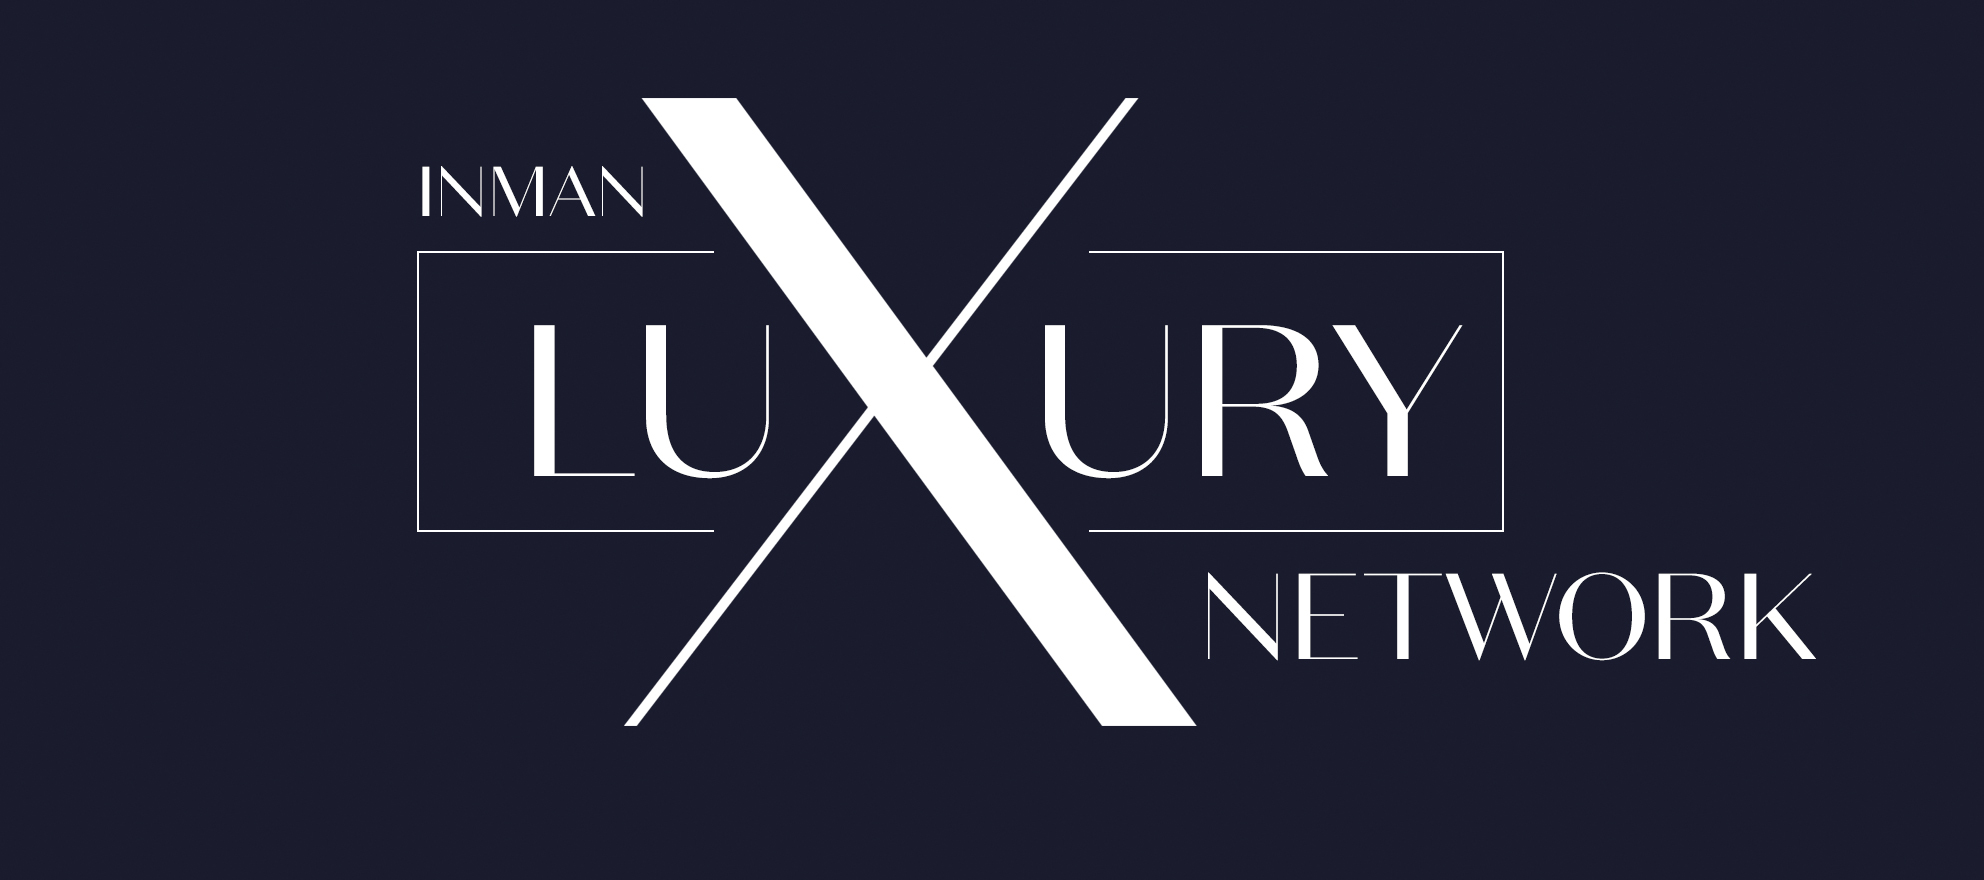 Introducing the Inman Luxury Network Inman